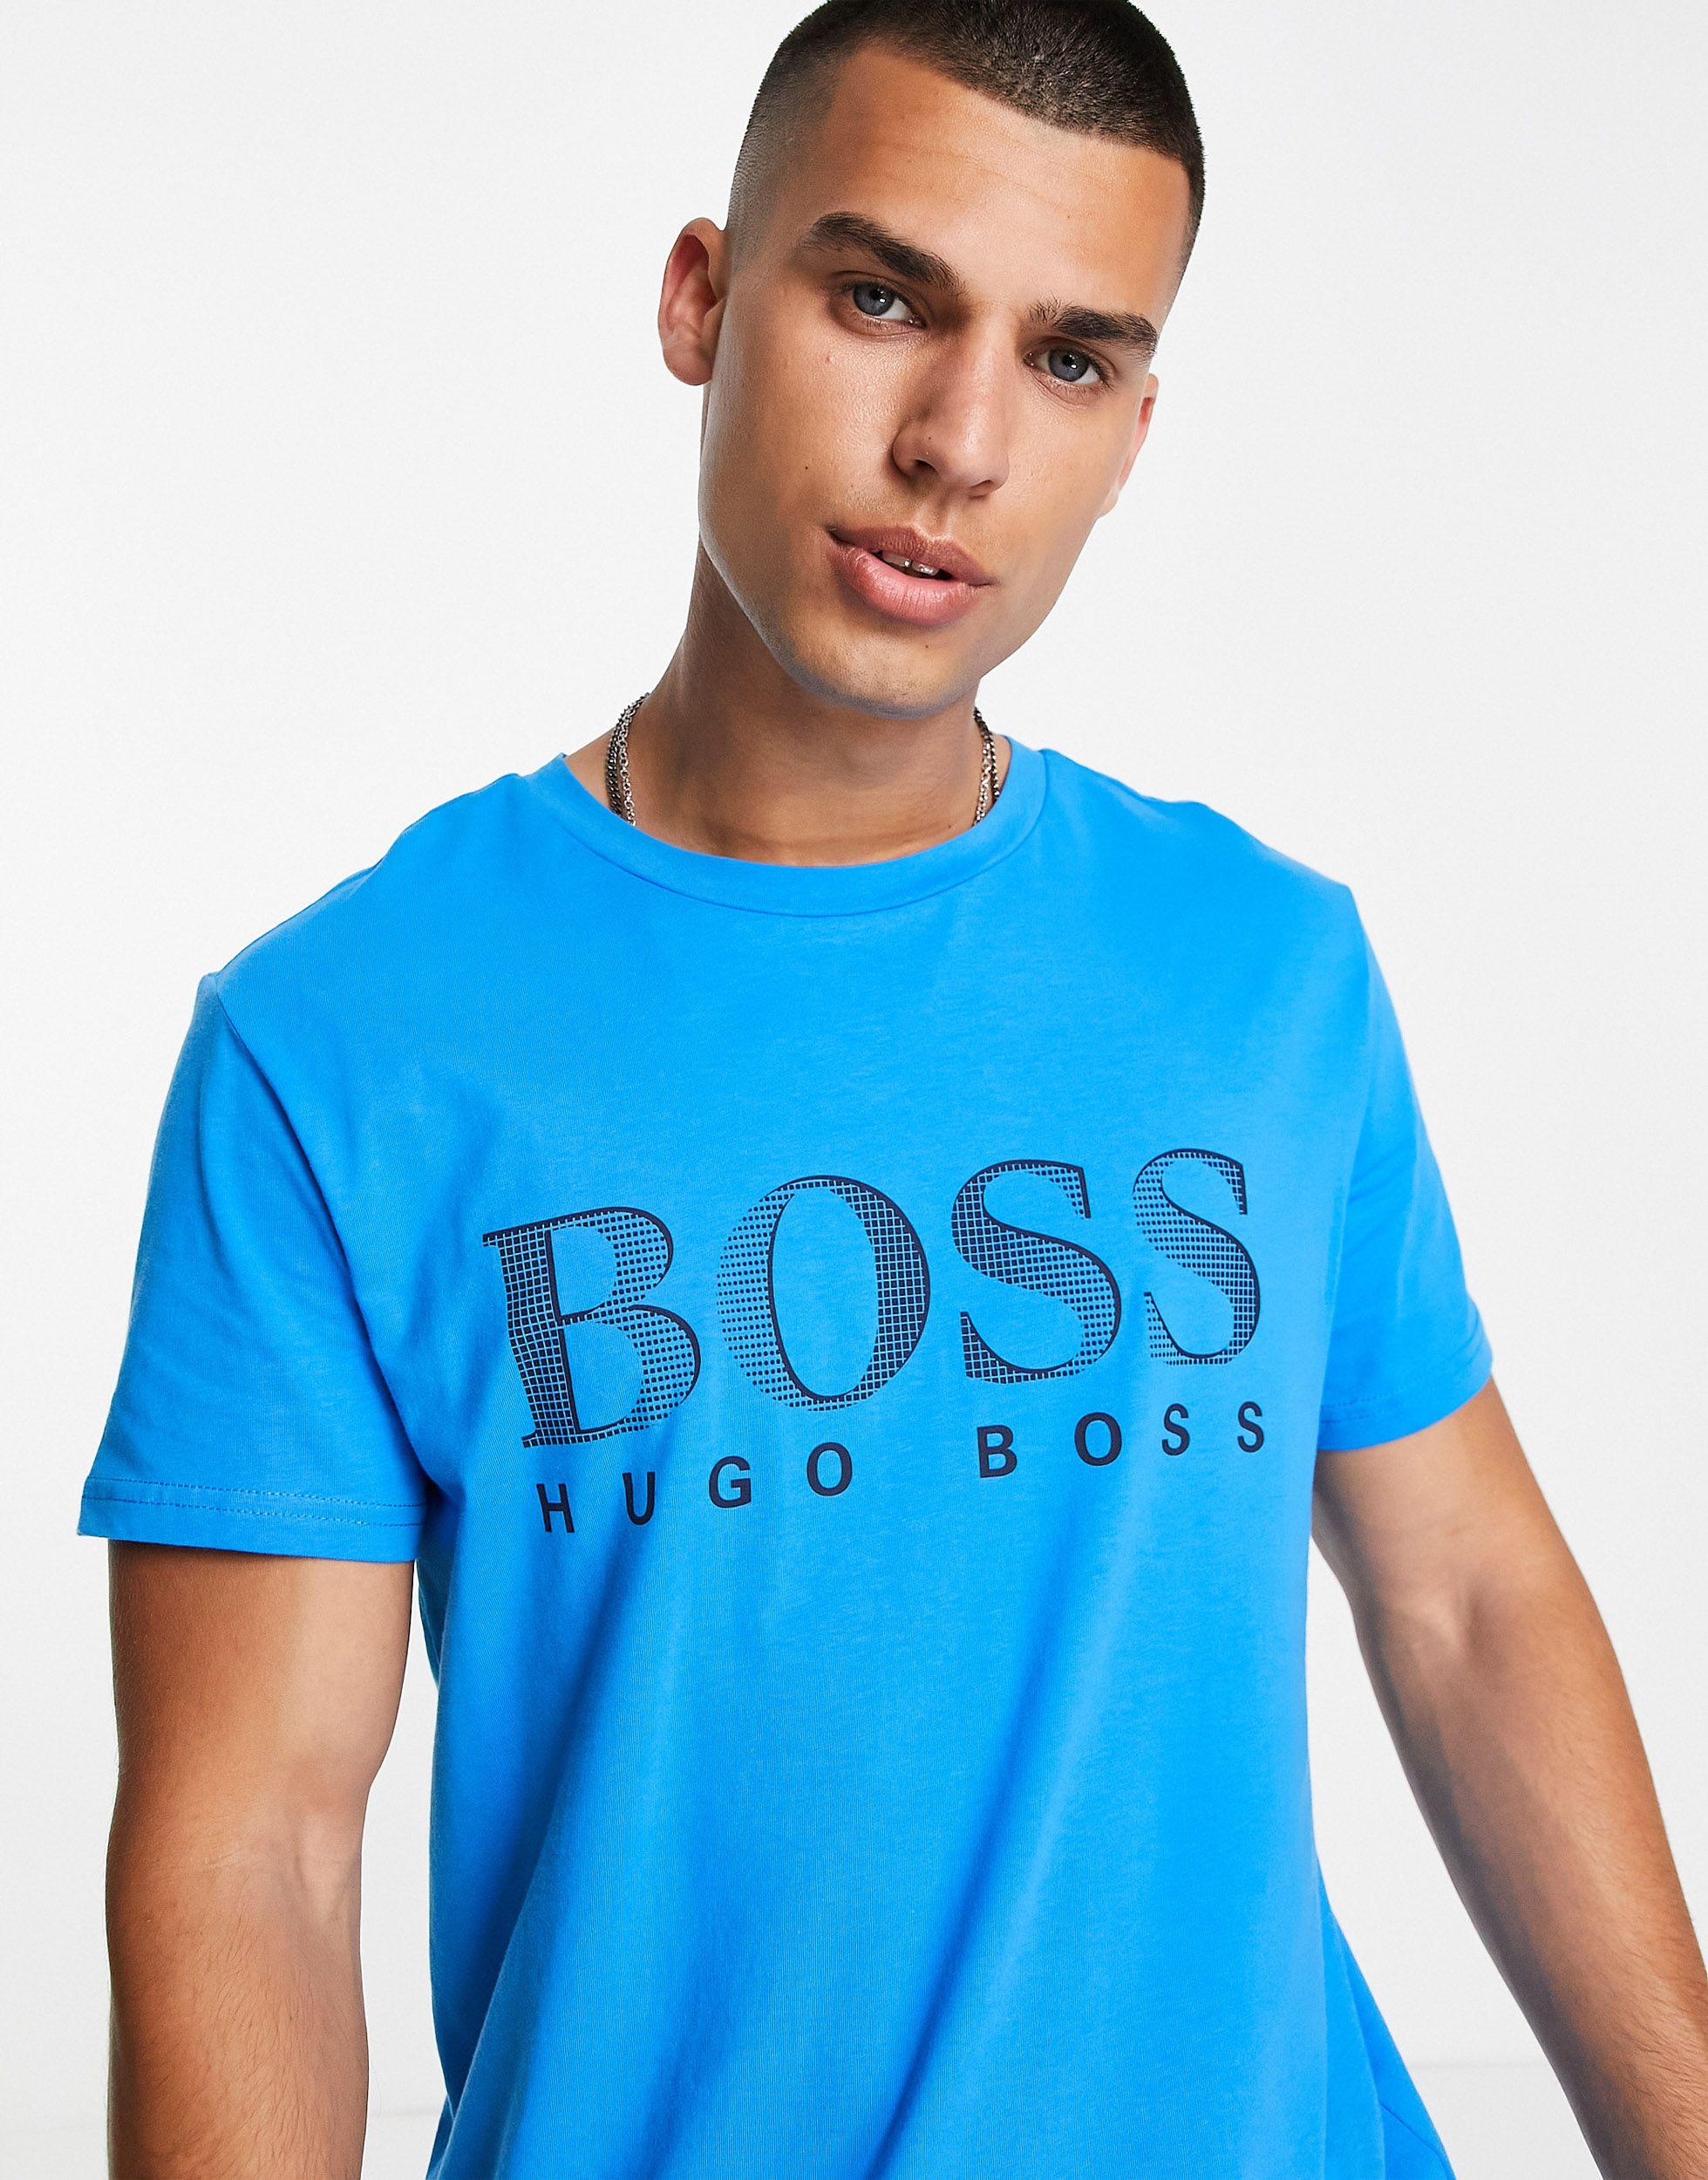 Hugo Boss Blue Tshirt Sale, SAVE 40% - lutheranems.com